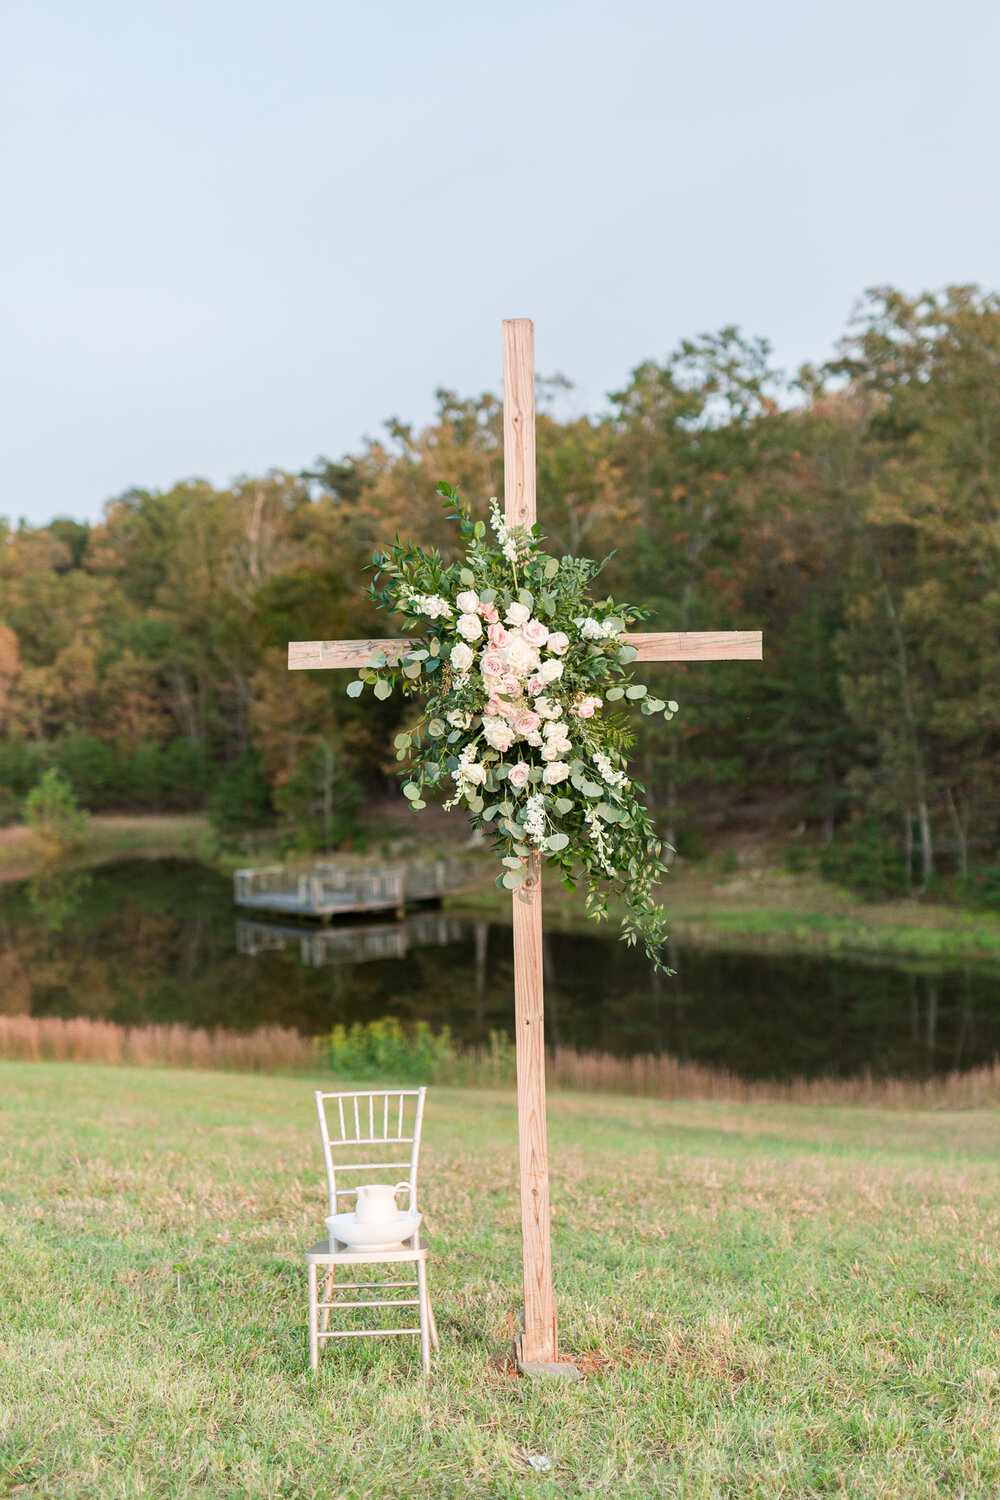 Riverview Manor in Hurt, Virginia || Lynchburg, VA Wedding Photographer || Fall Wedding in Central Virginia || www.ashleyeiban.com